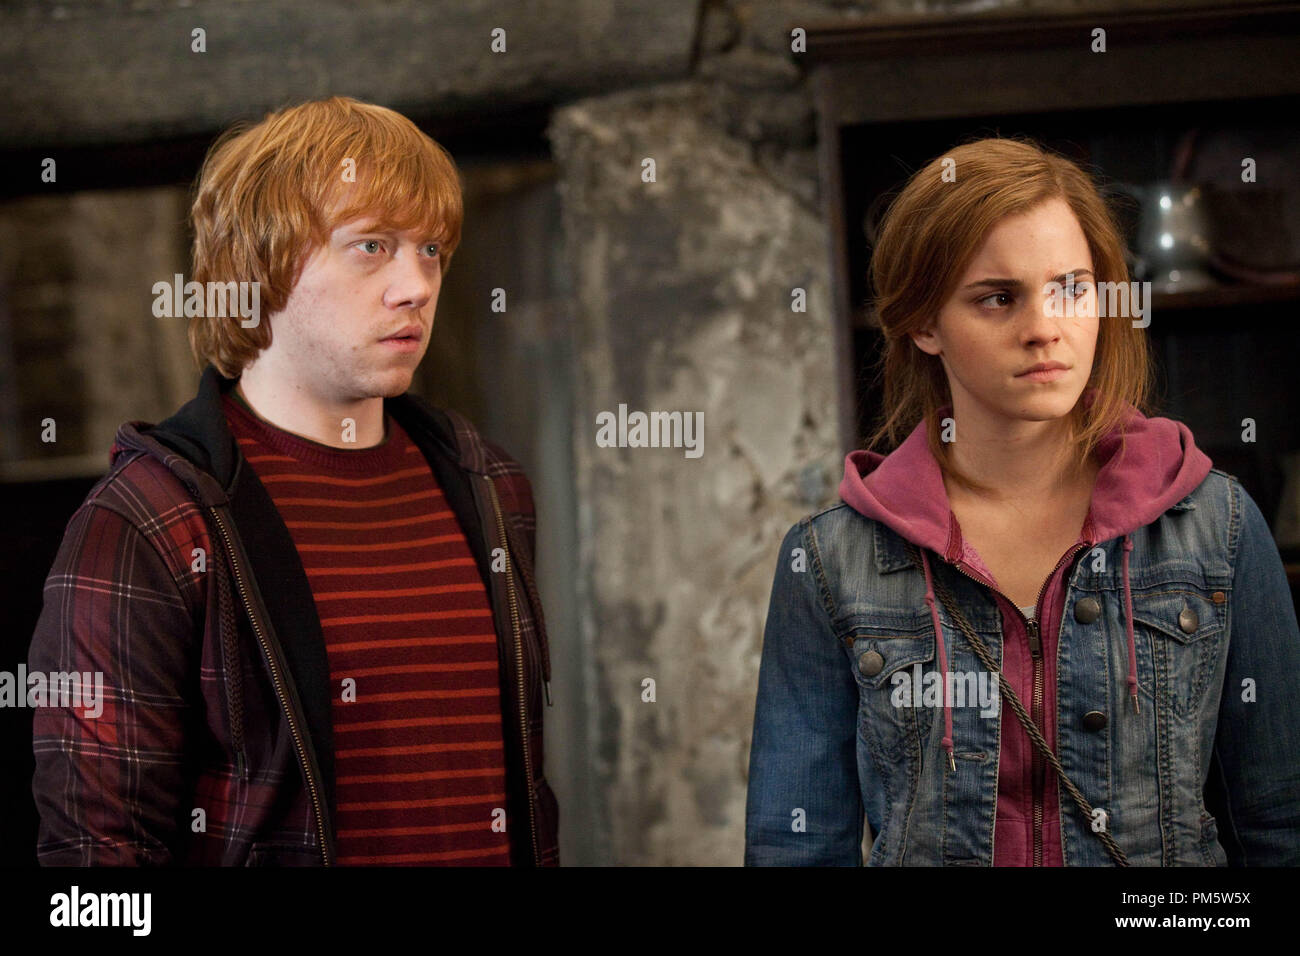 Harry, Hermione & Ron (Harry Potter 7)